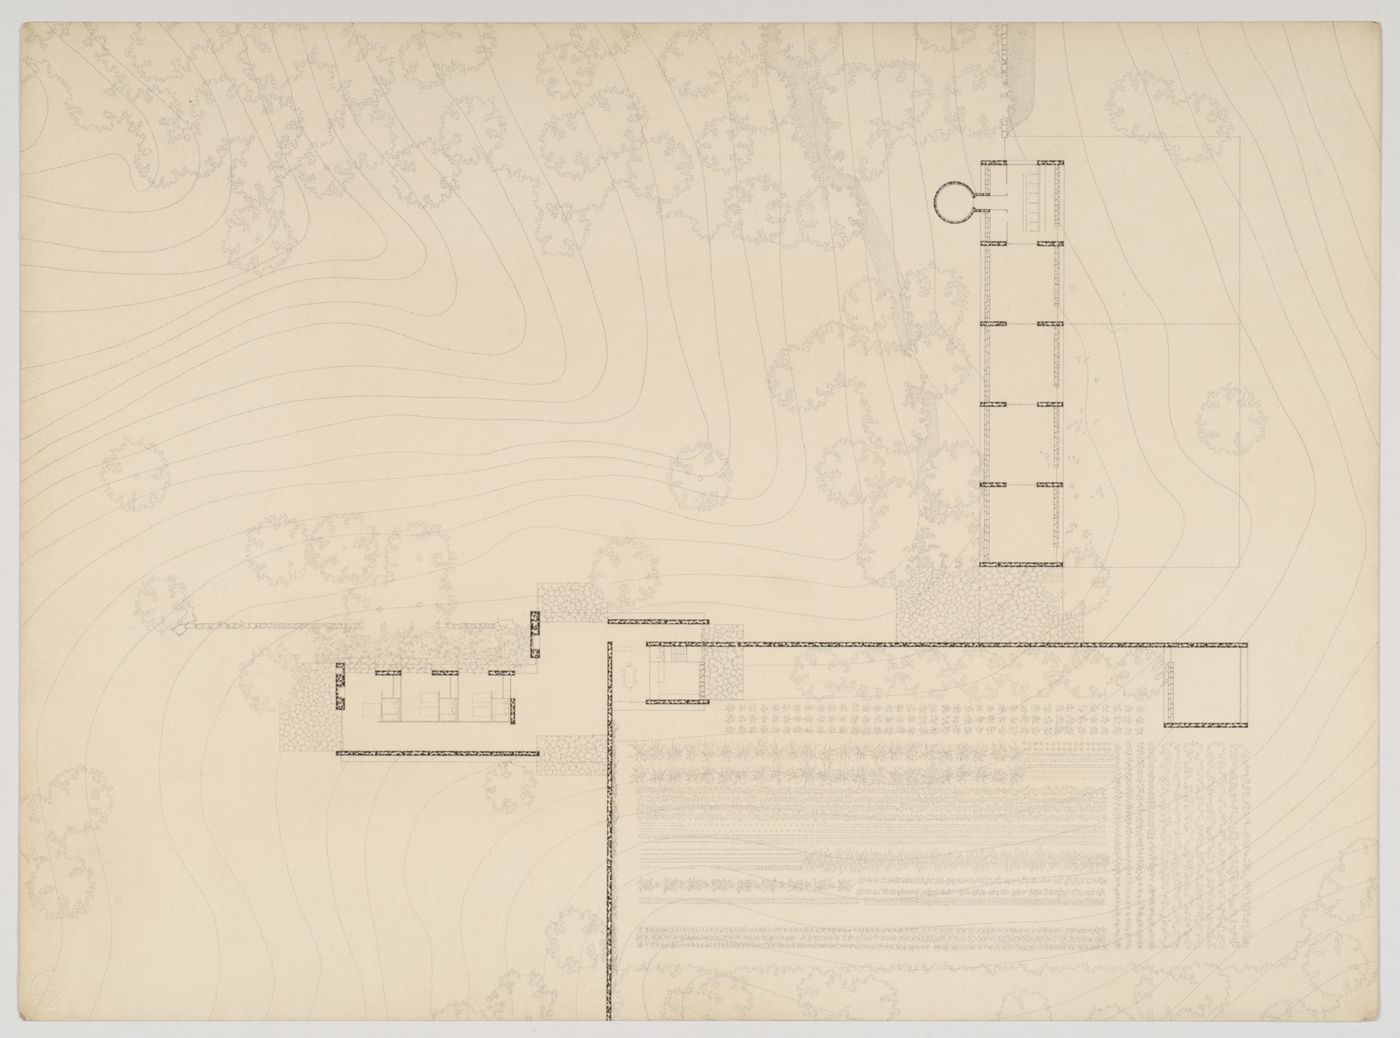 Site plan for Caldwell Farm, Bristol, Wisconsin